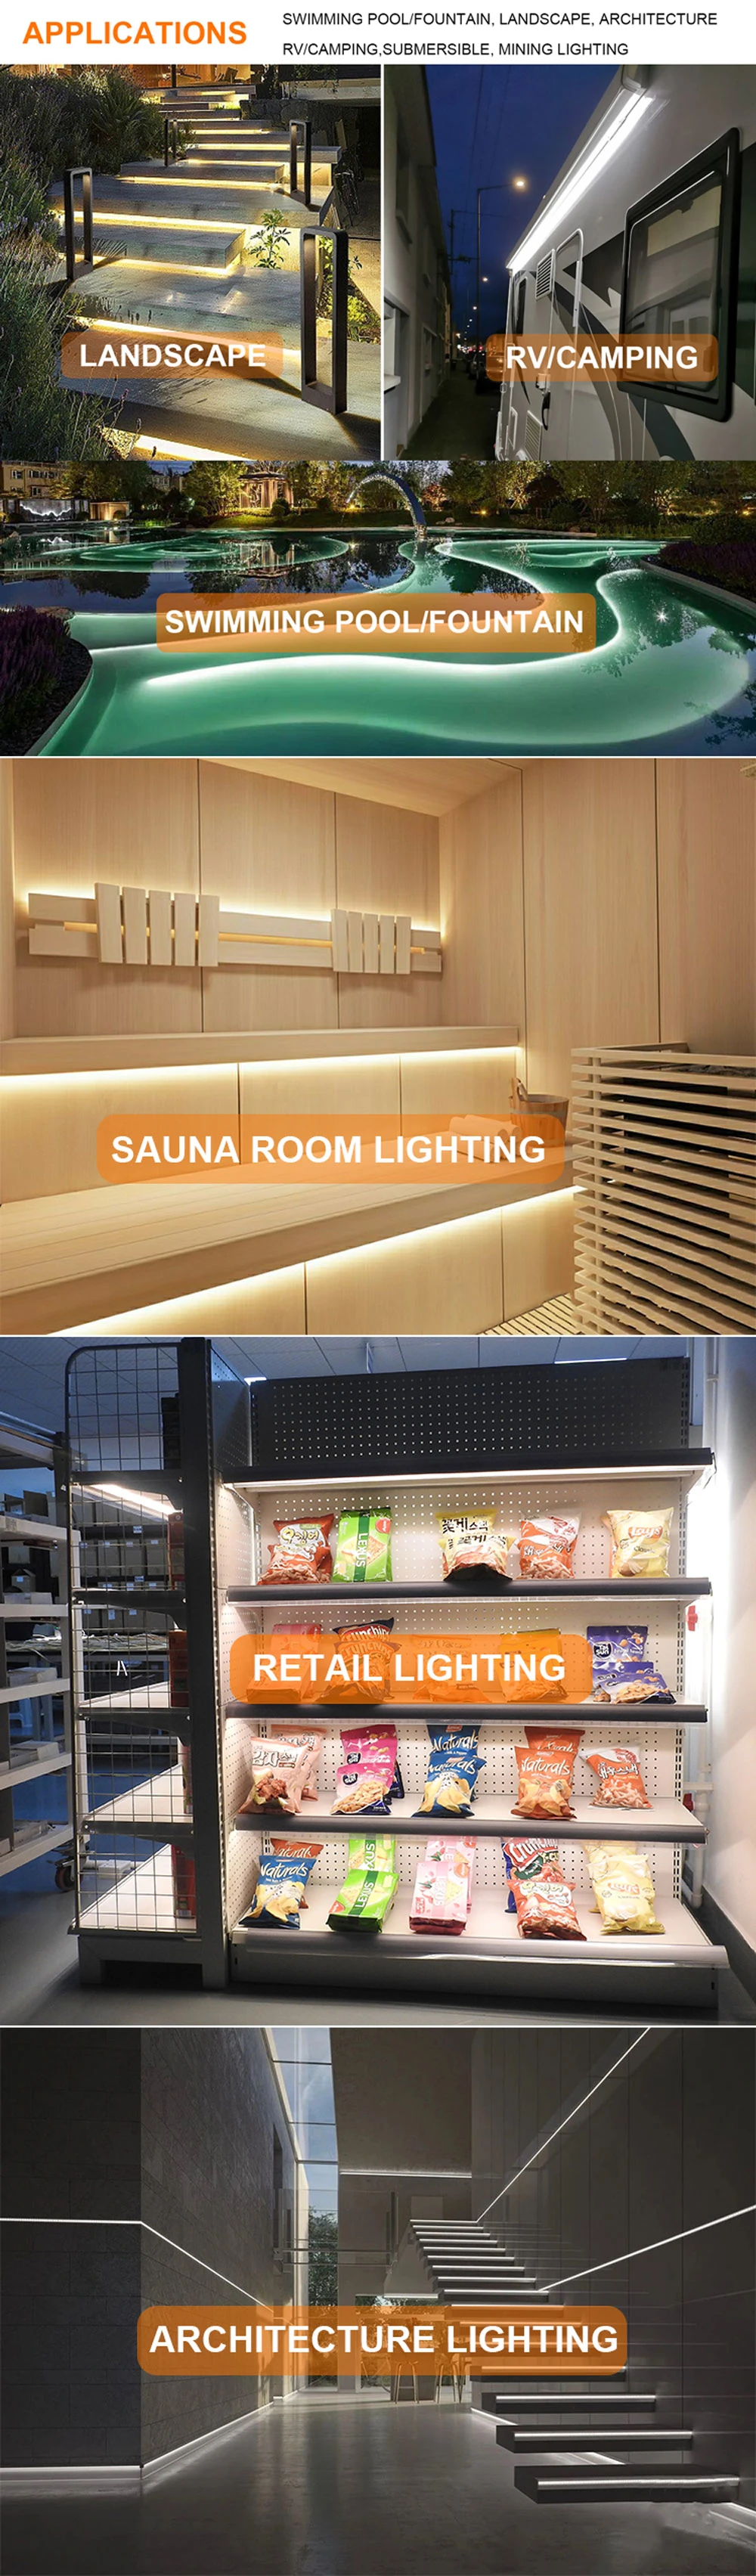 China Wholesale Tiras LED Ramadan Home Decoration String Light IP68 Waterproof COB Strip LED Light